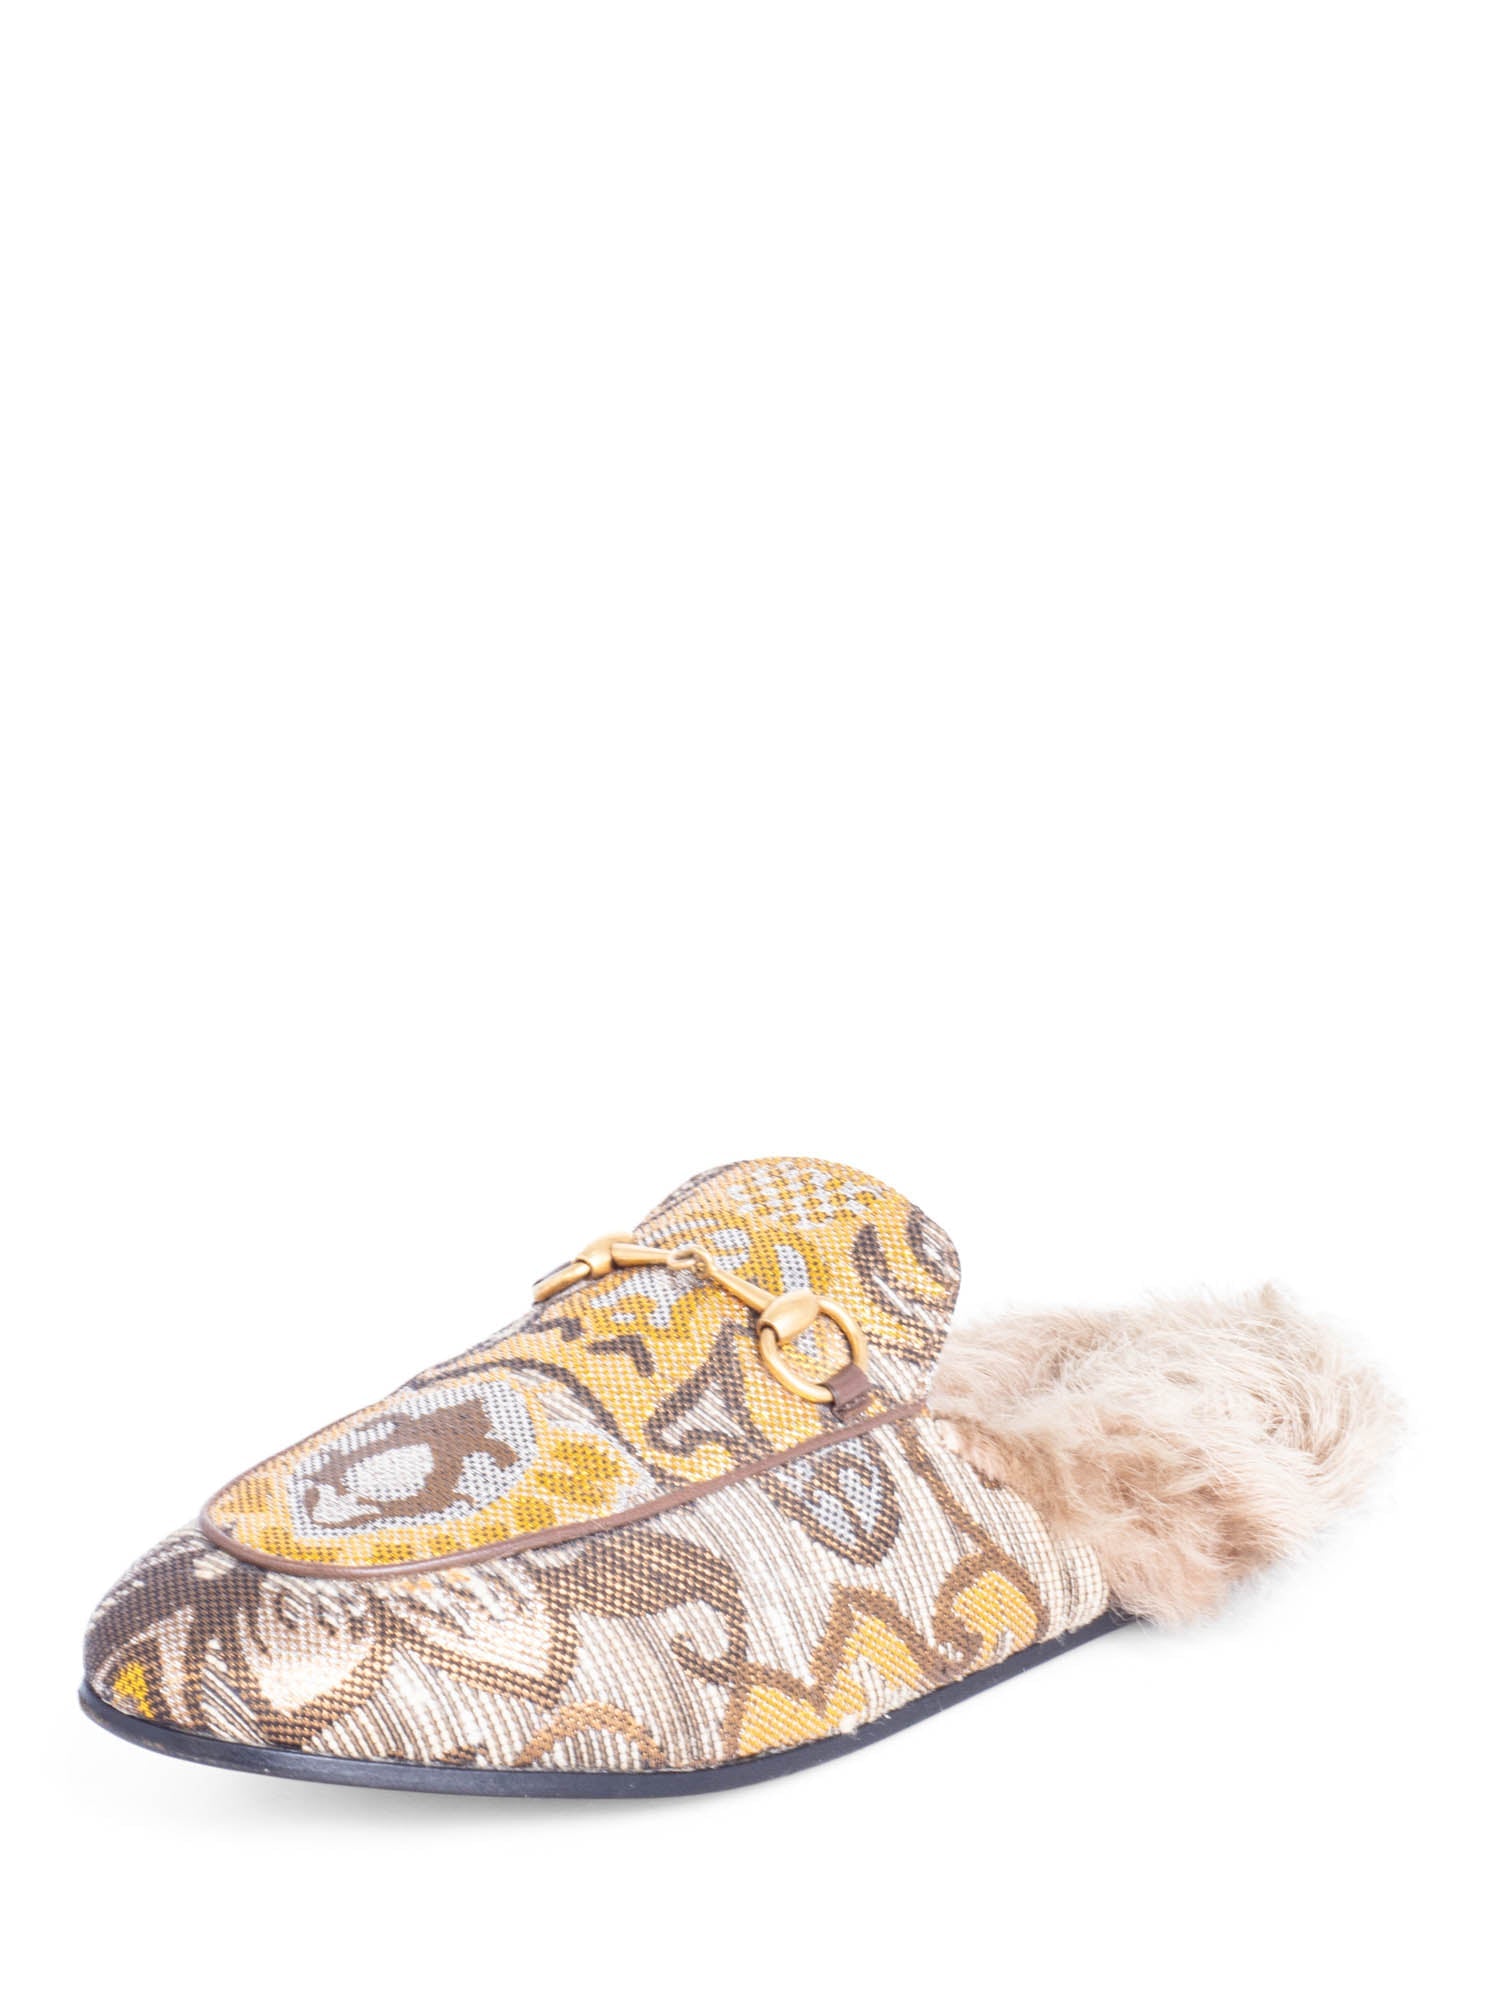 Gucci Brocade Horsebit Buckle Fur Lined Slip On Loafers Beige Multicolor